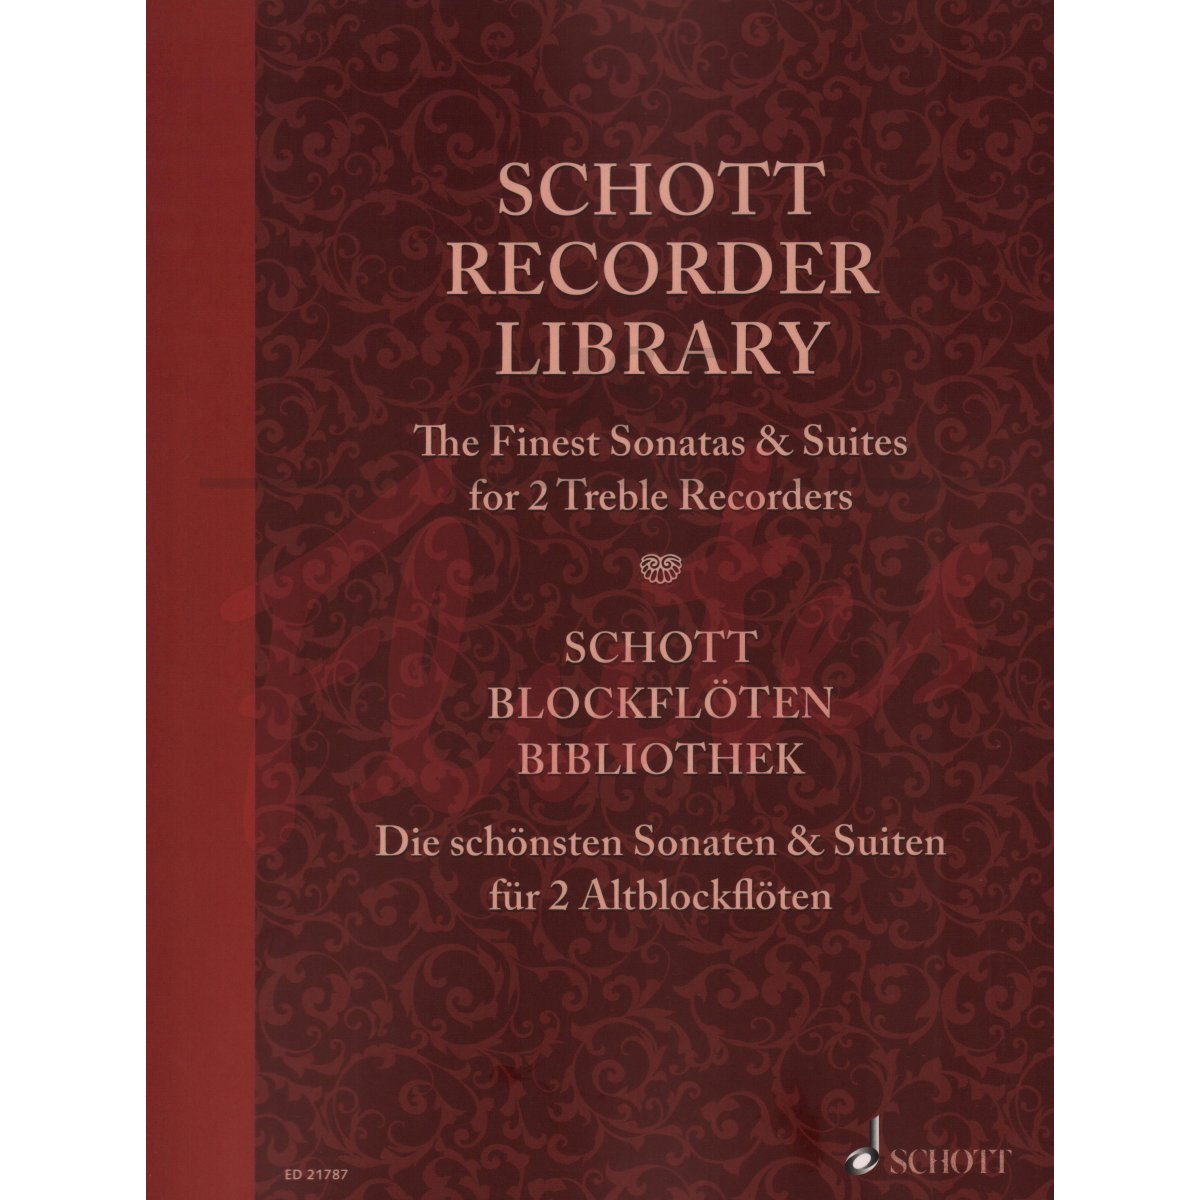 Schott Recorder Library [2 Treble Recorders]